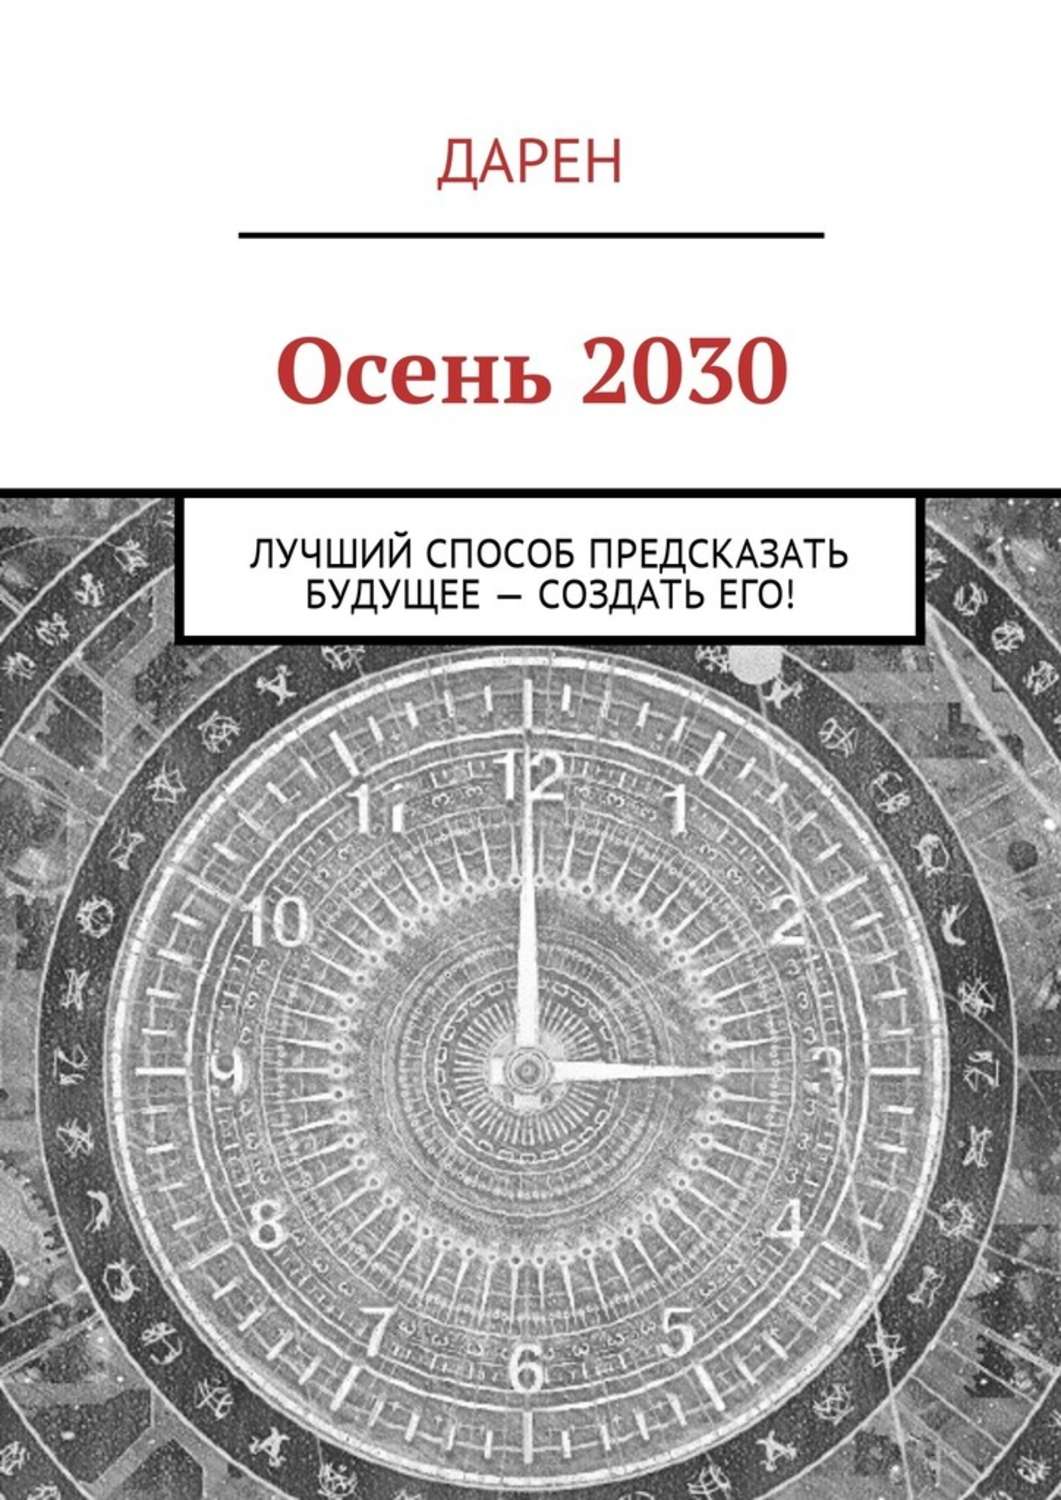 Книга предсказаний будущего